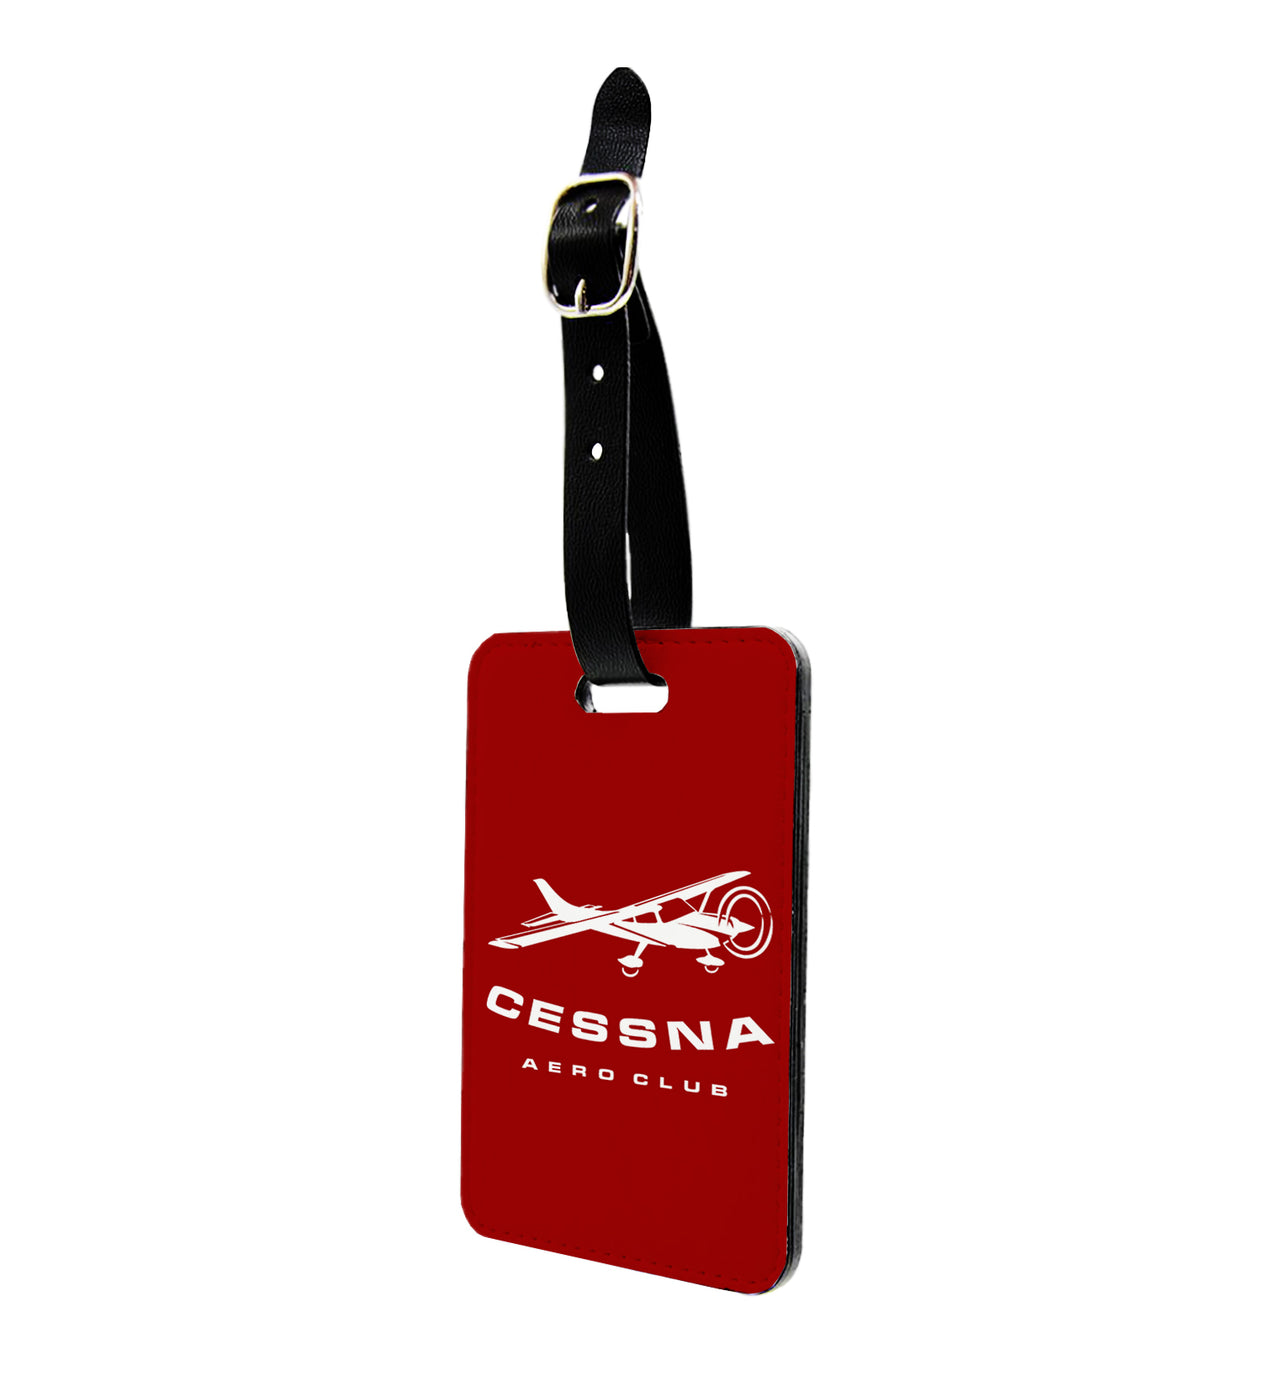 Cessna Aeroclub Designed Luggage Tag